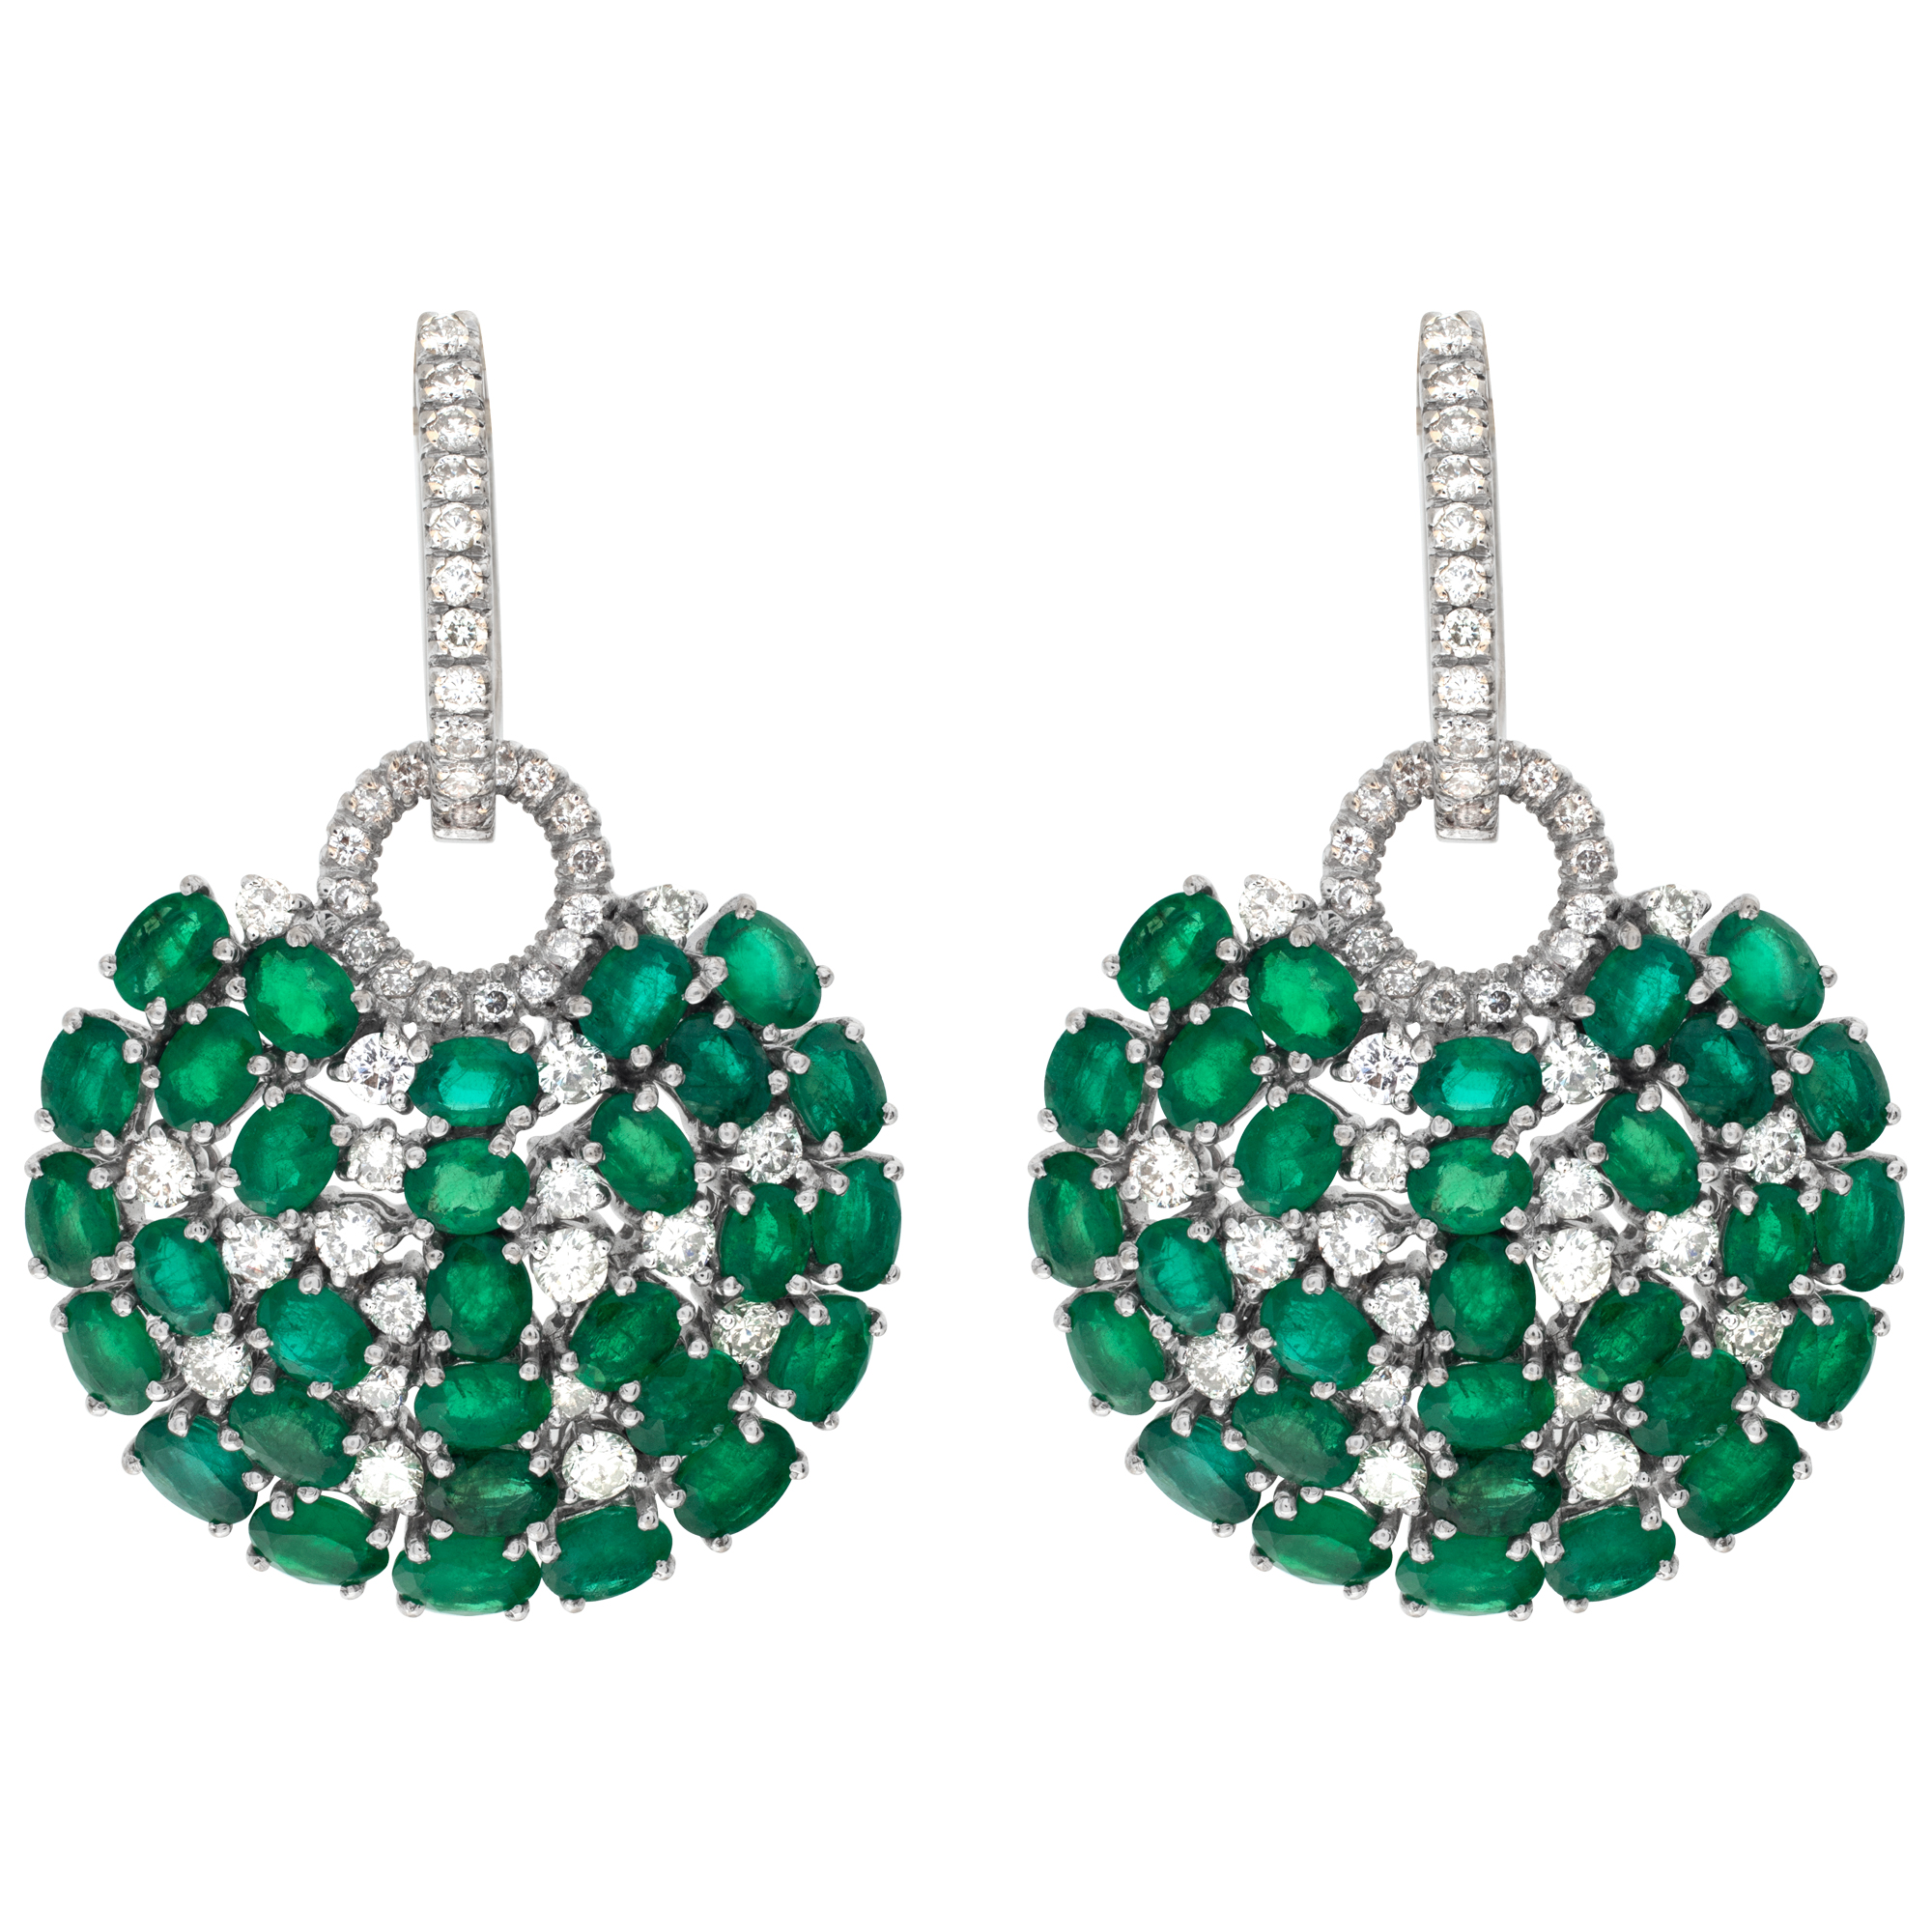 Lovely 18k white gold diamond and emerald drop earrings (Stones)